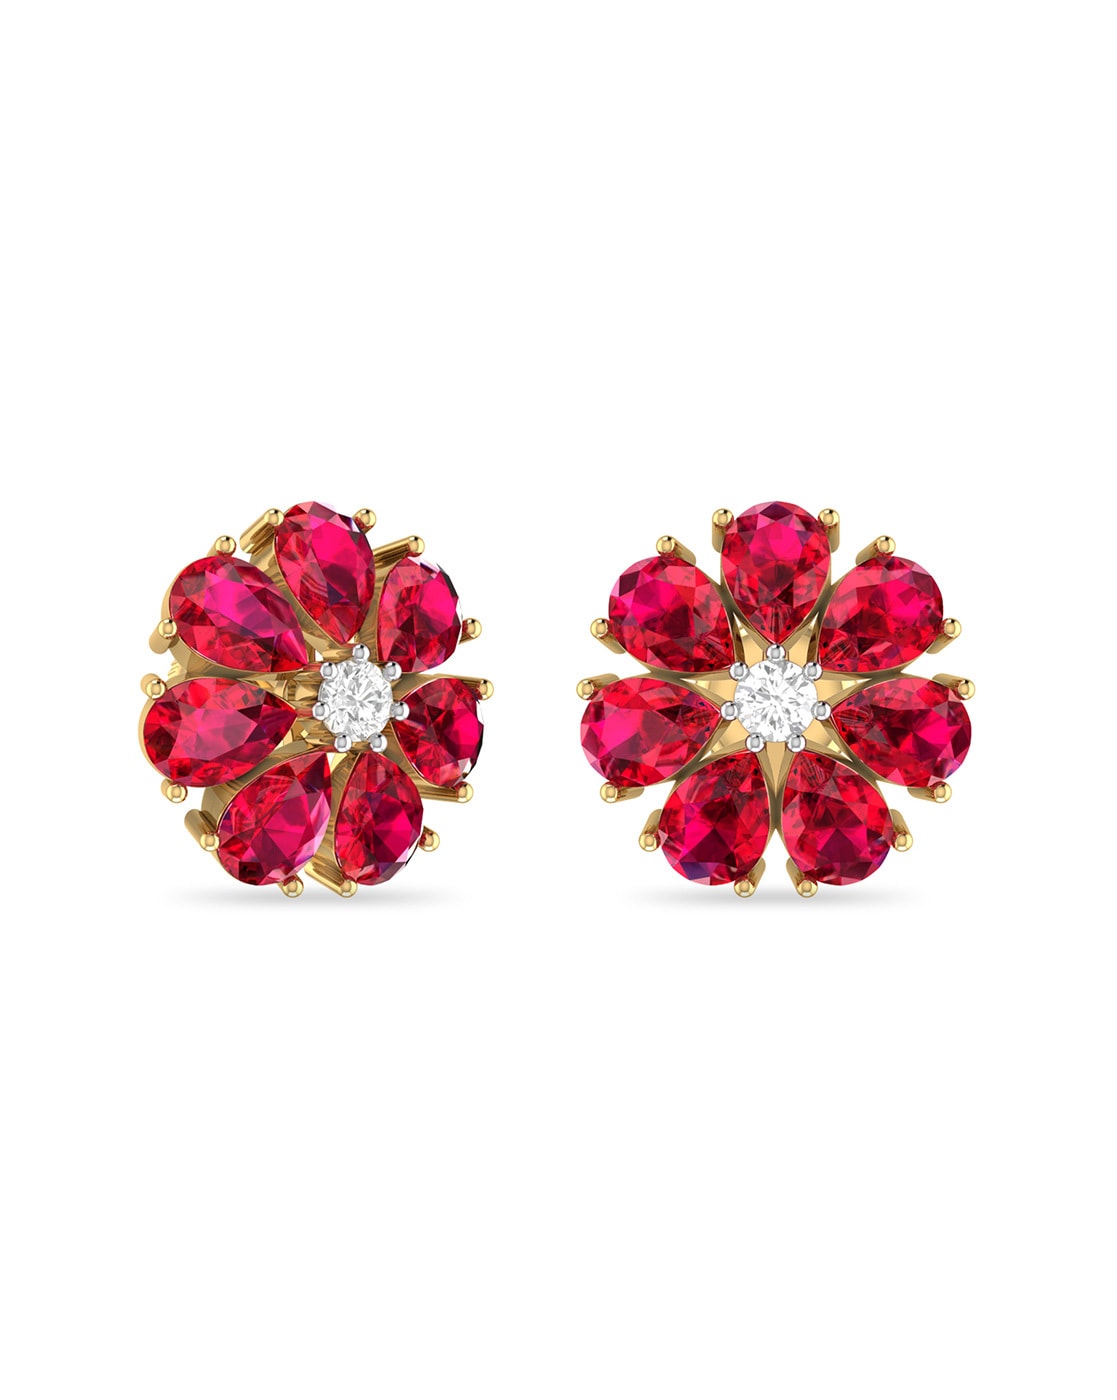 Regal Simulated Diamond Emerald and Ruby Stud Earrings  Ratnali Jewels   ratnalijewels